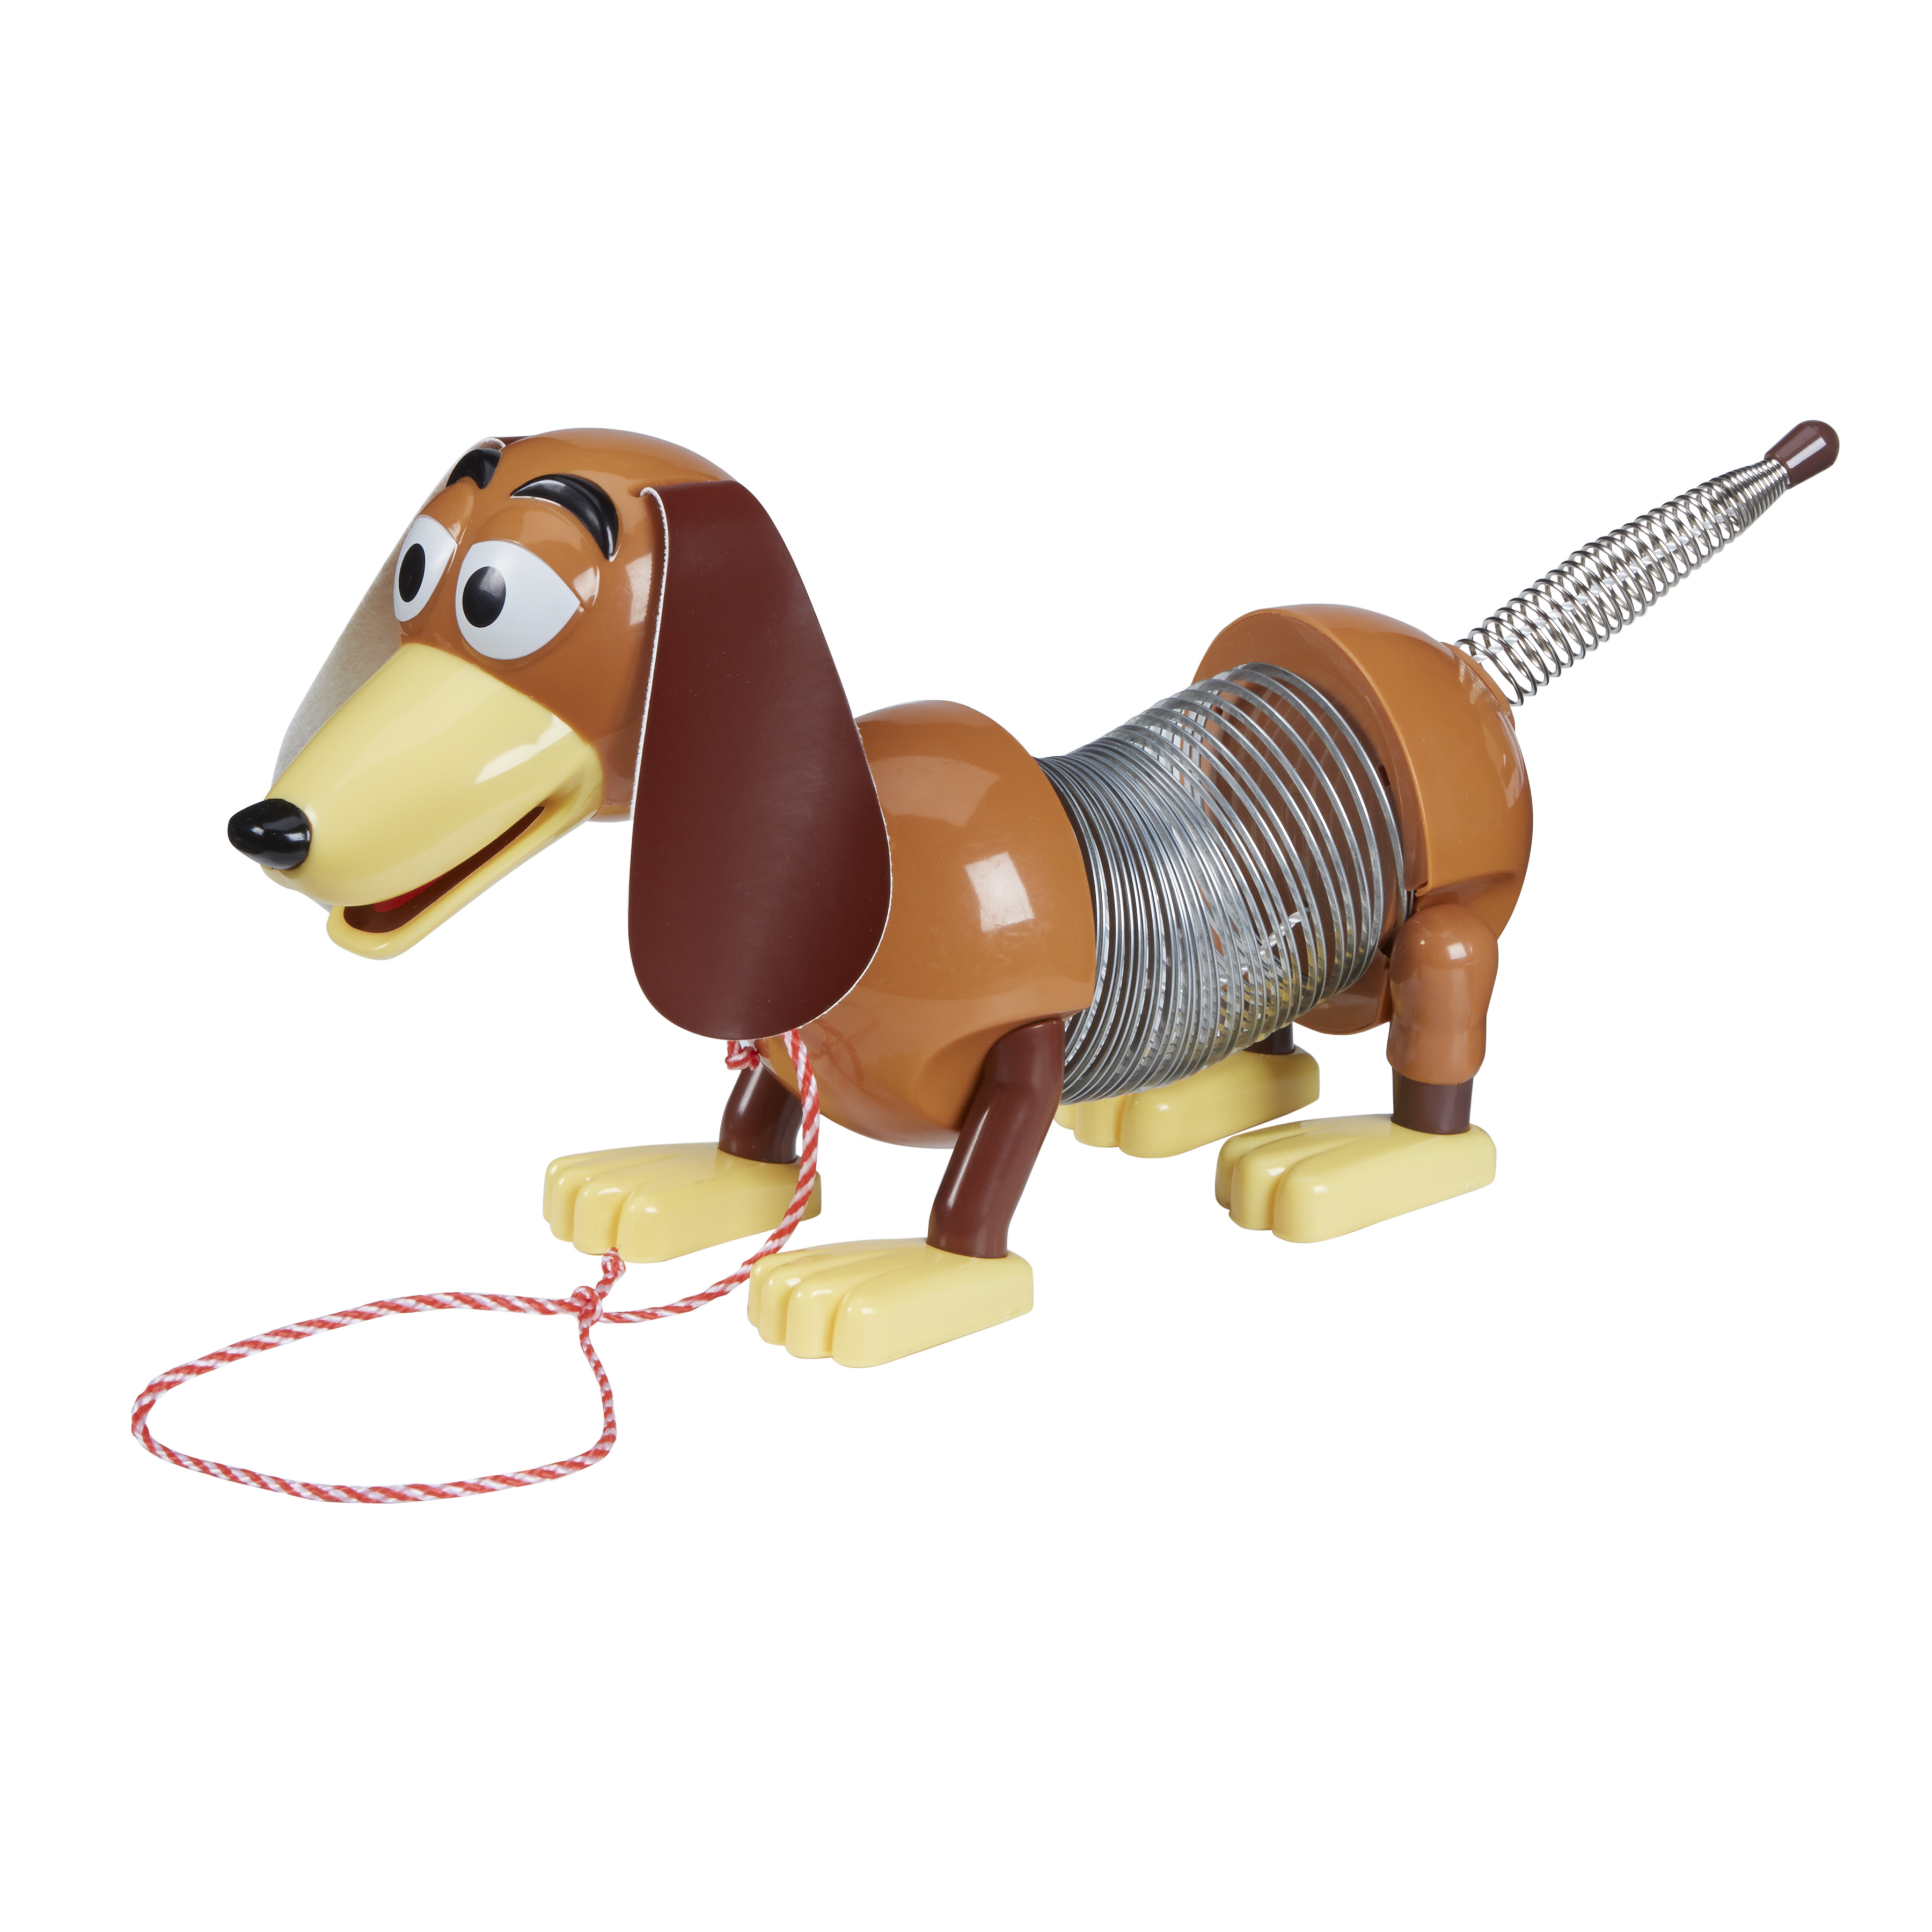 Disney Pixar Toy Story 4 Slinky Dog - image 3 of 7